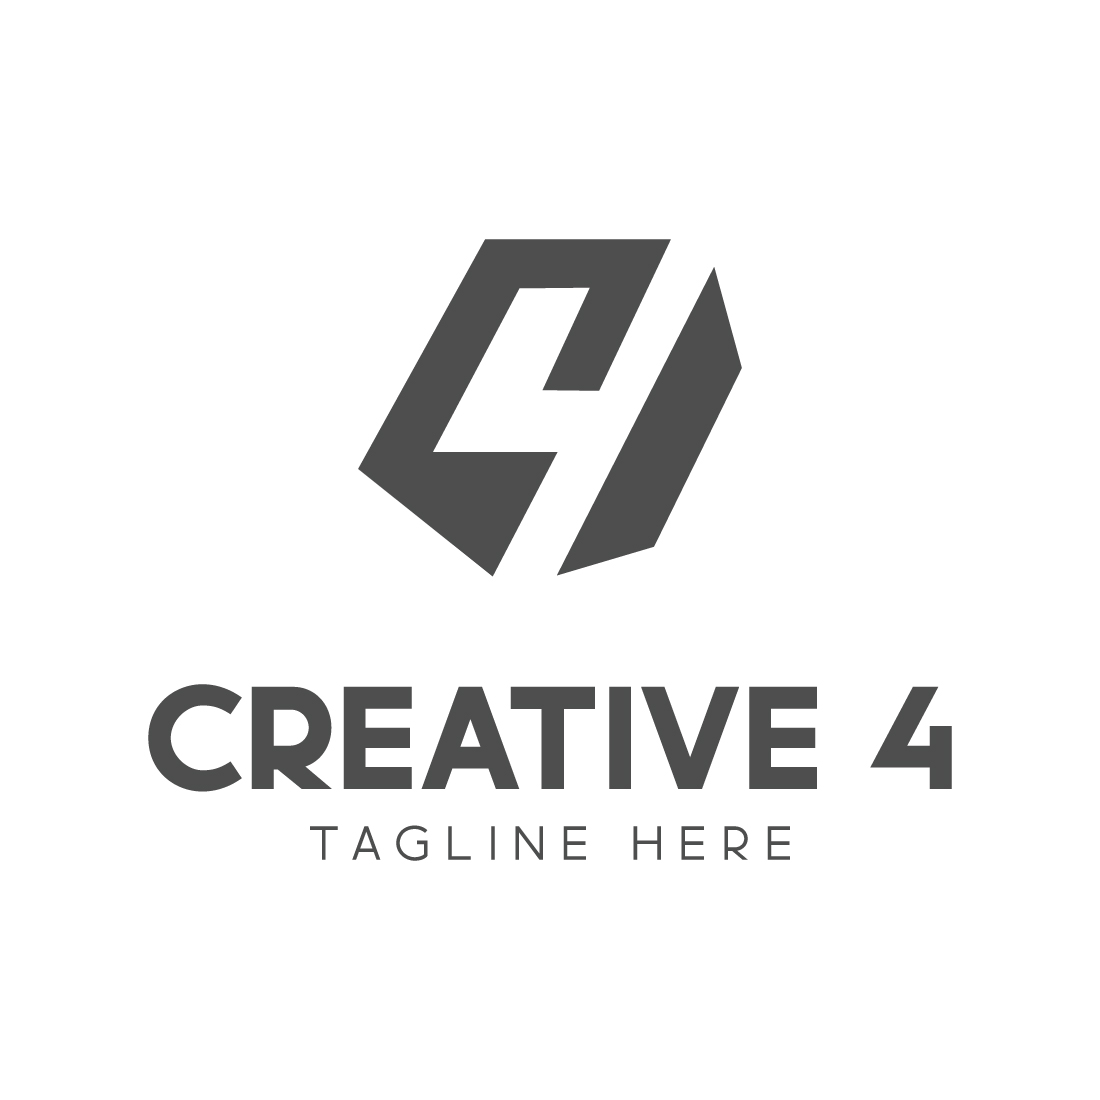 Creative 4 Logo cover image.